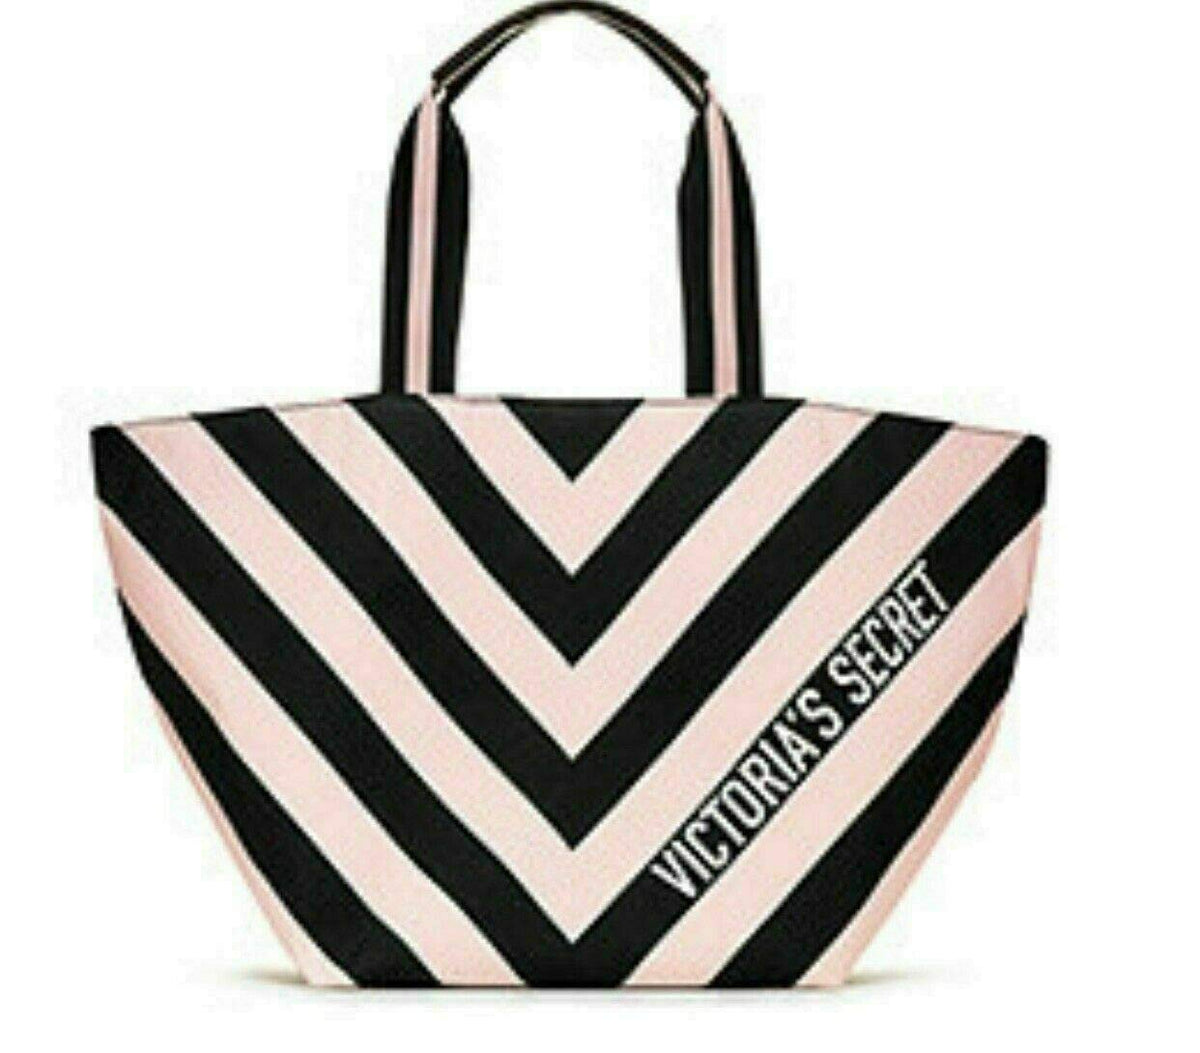 Victoria's Secret, Bags, New Victorias Secret Canvas Tote W Shoulder  Strap Pink White Striped